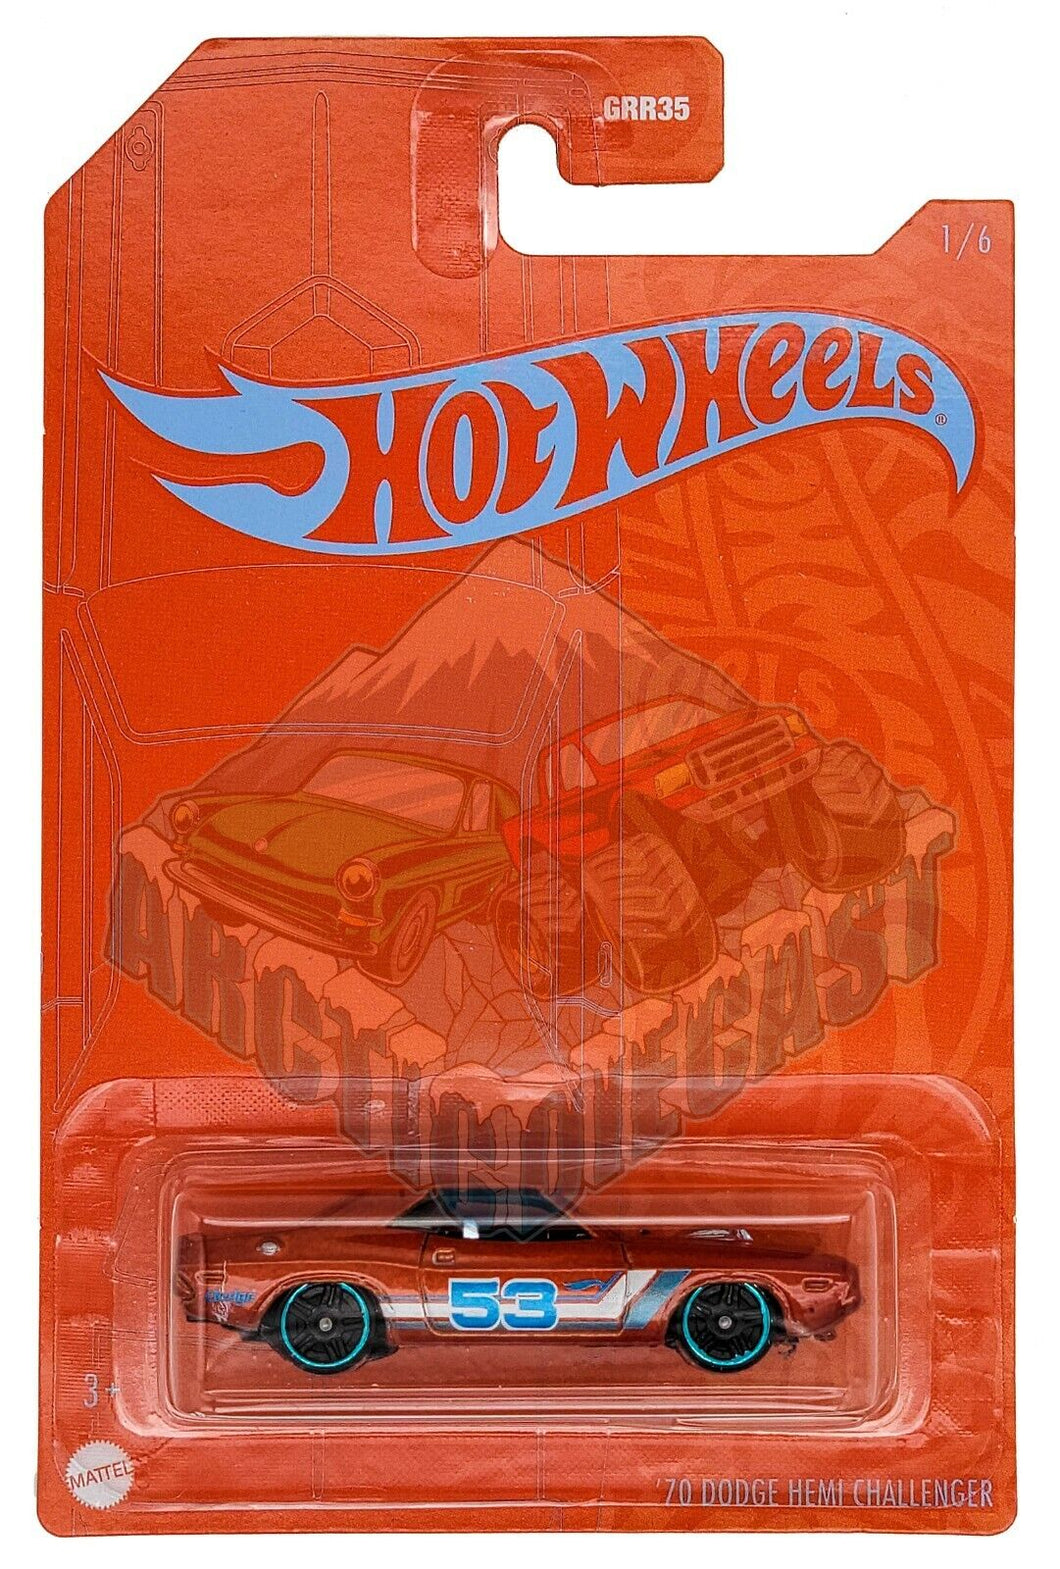 Hot Wheels '70 Dodge HEMI Challenger 53th Anniversary 1/6